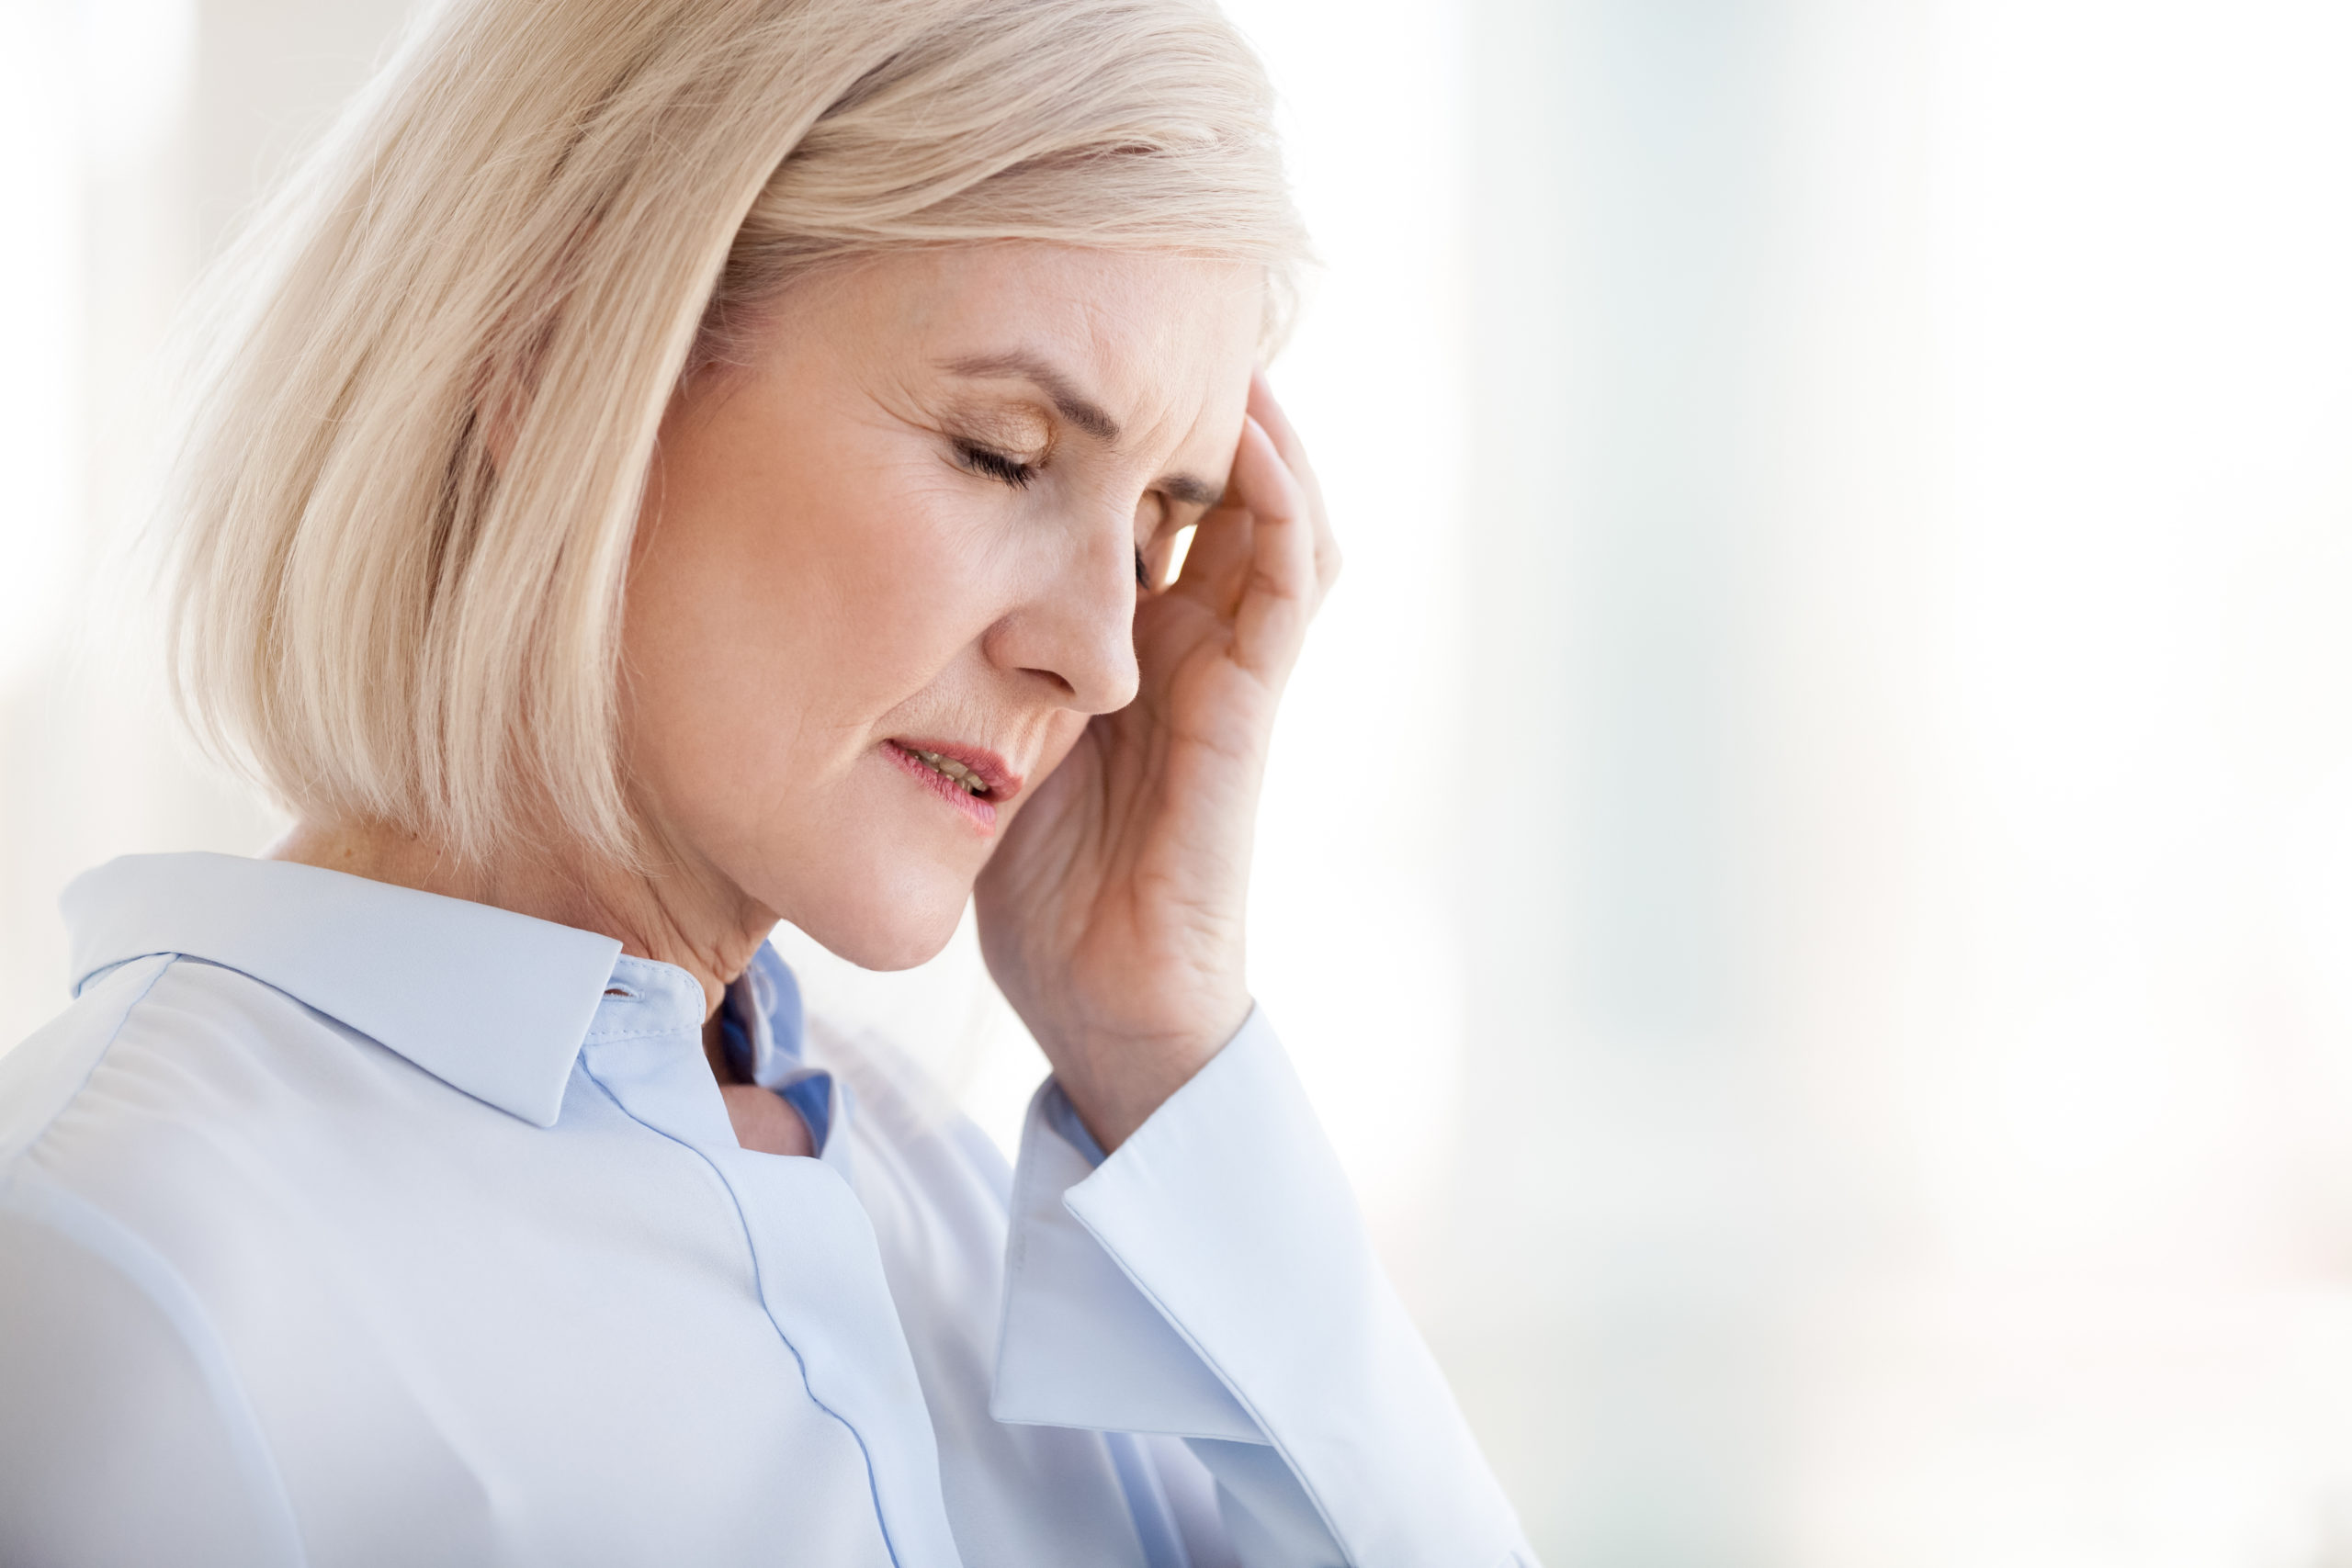 Lessen Migraine Pain, Improve Quality of Life